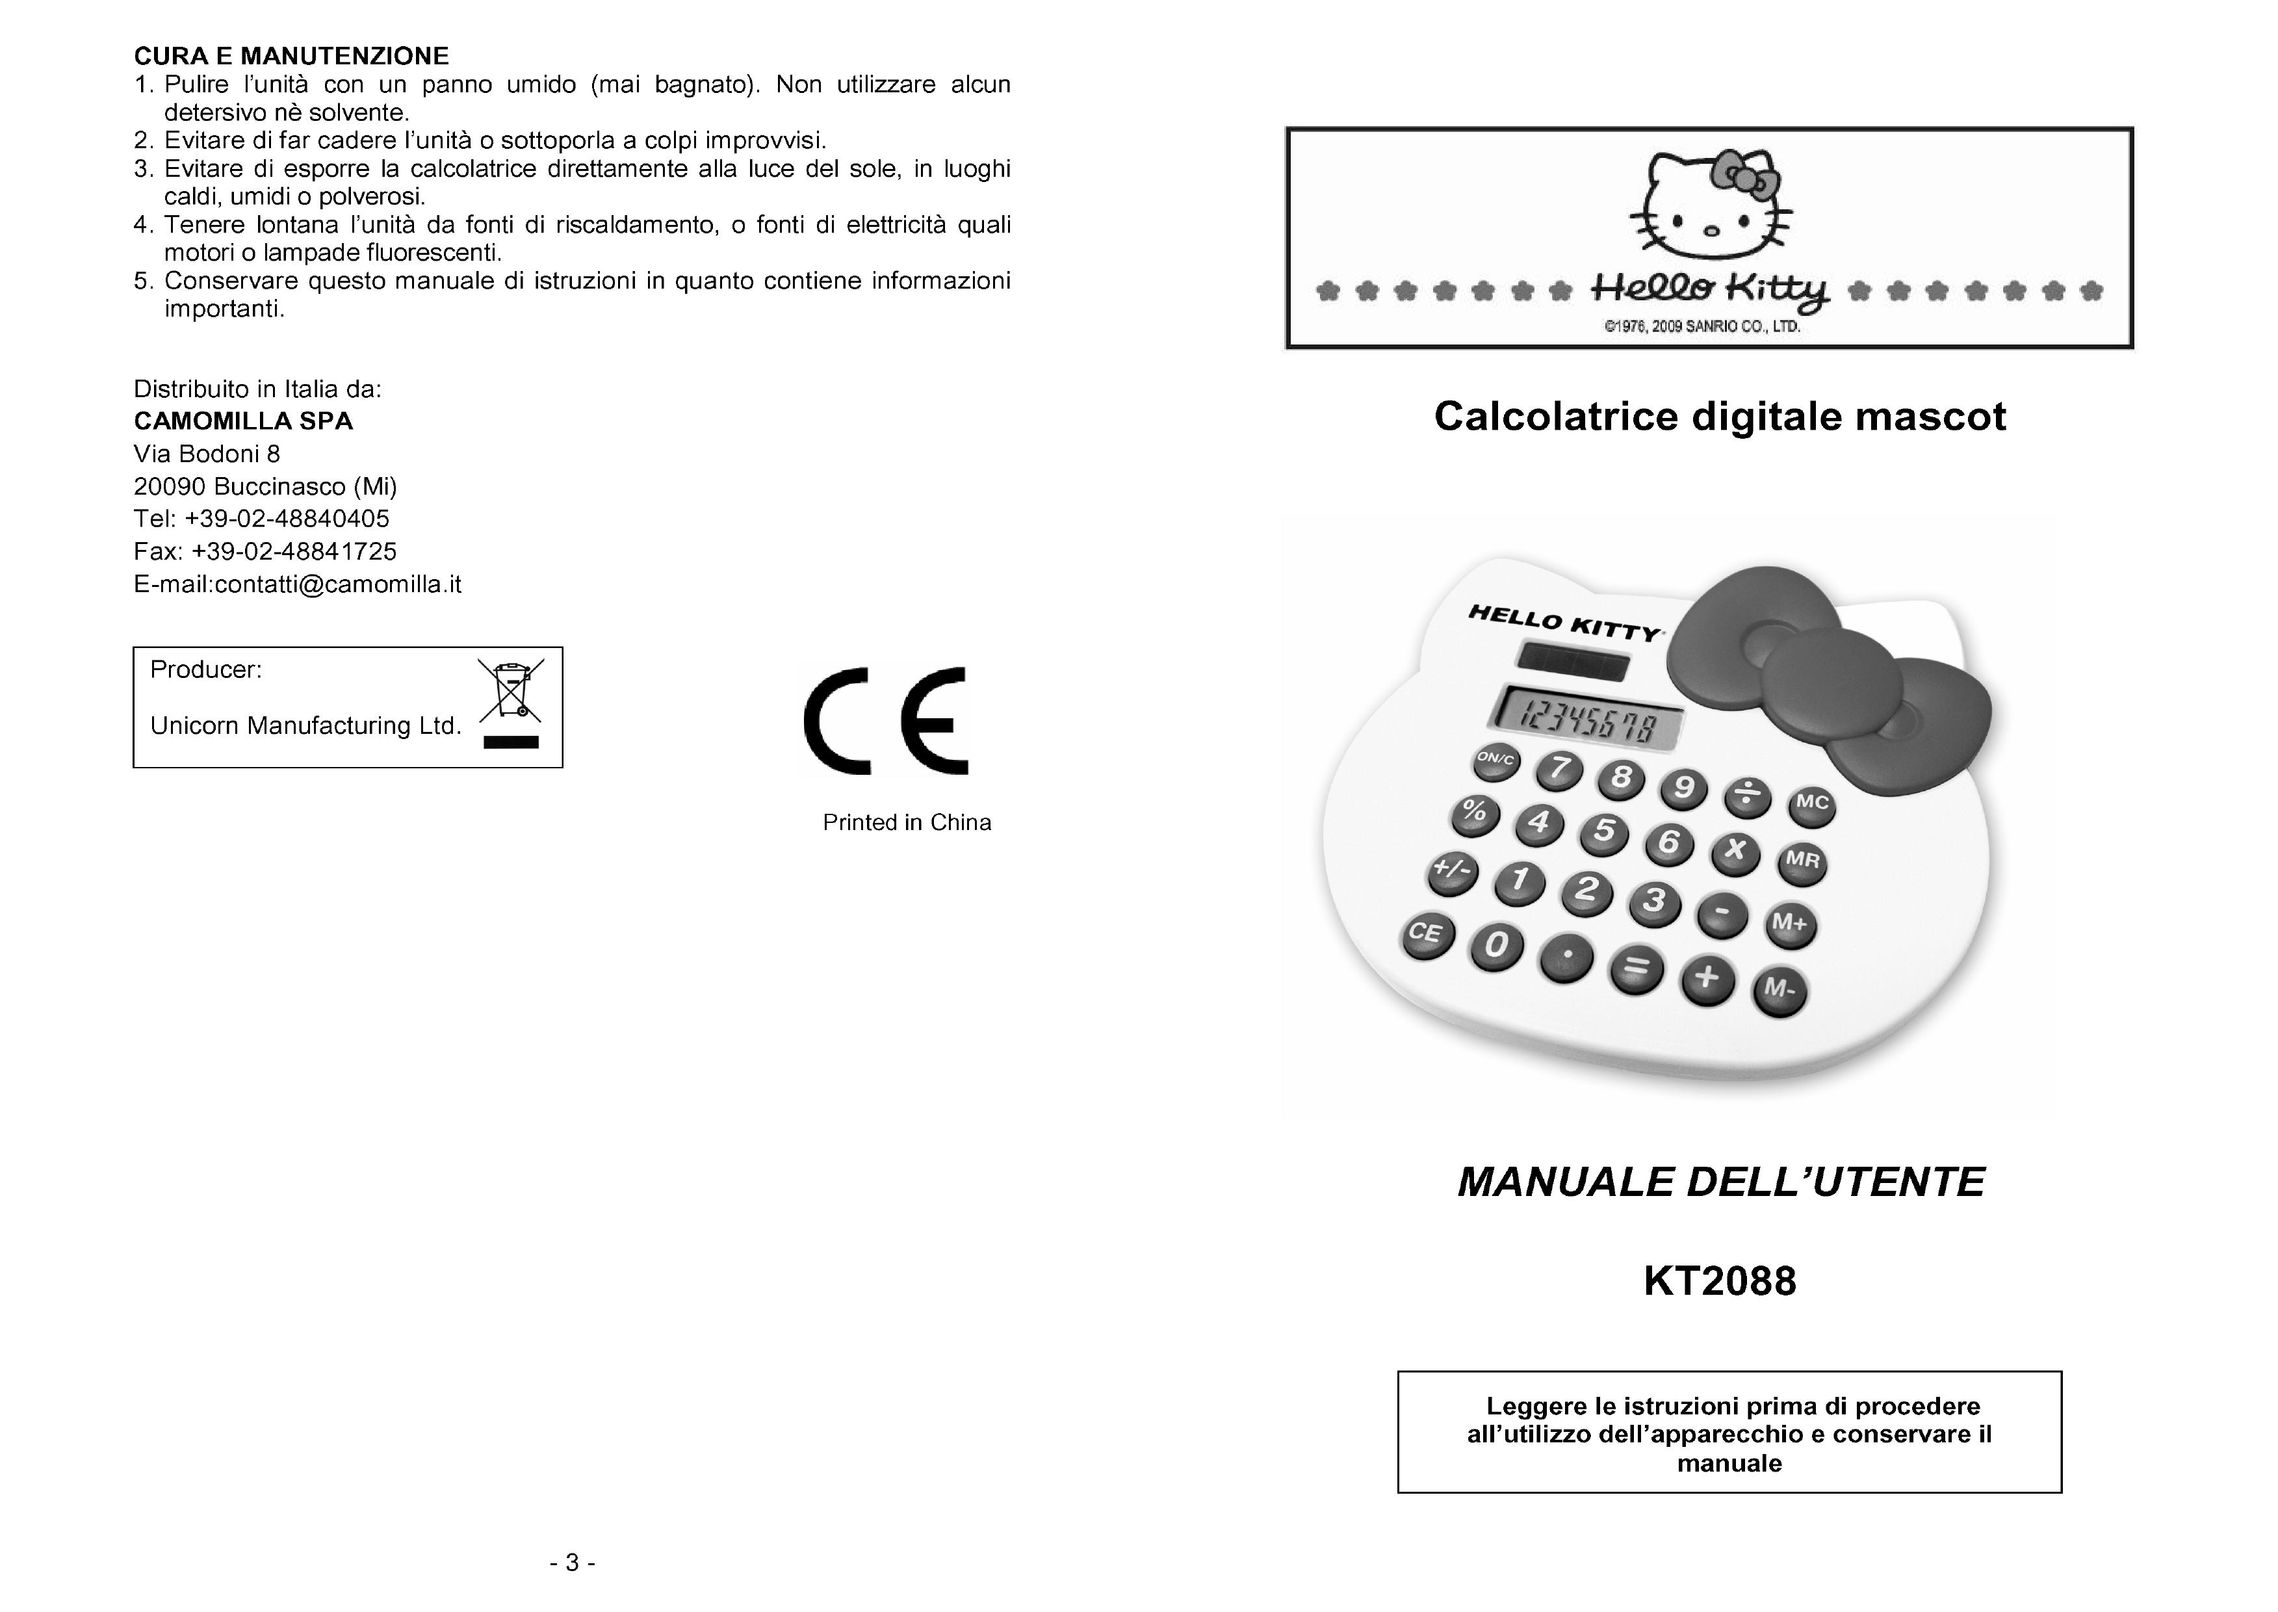 Jensen KT2088 Calculator User Manual